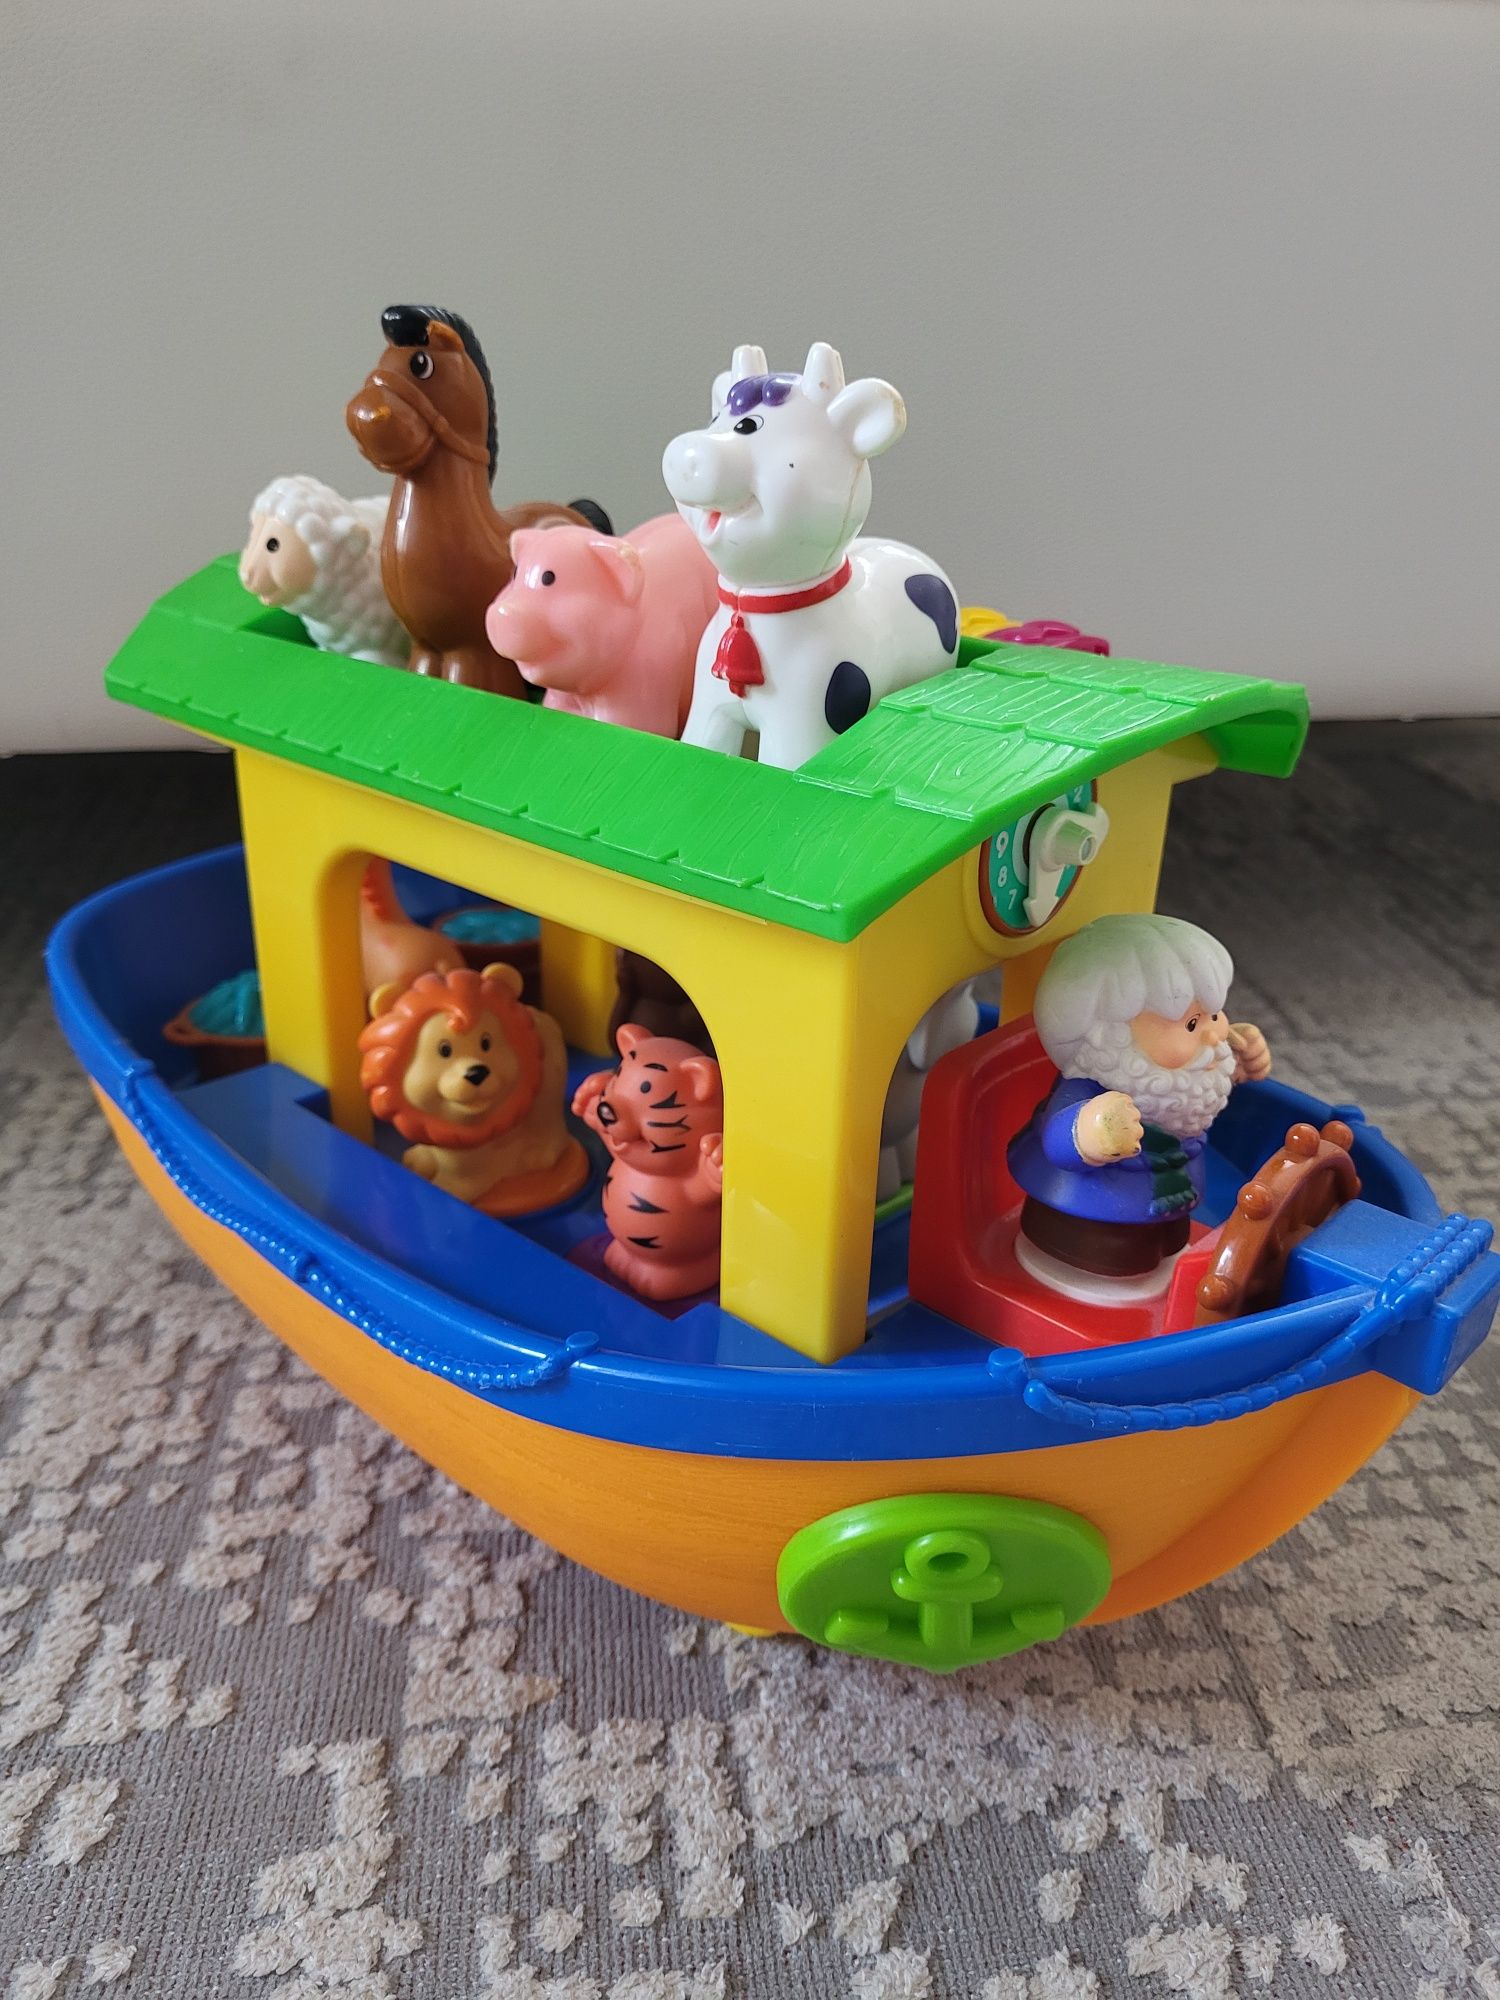 Arka Noego zabawka interaktywna